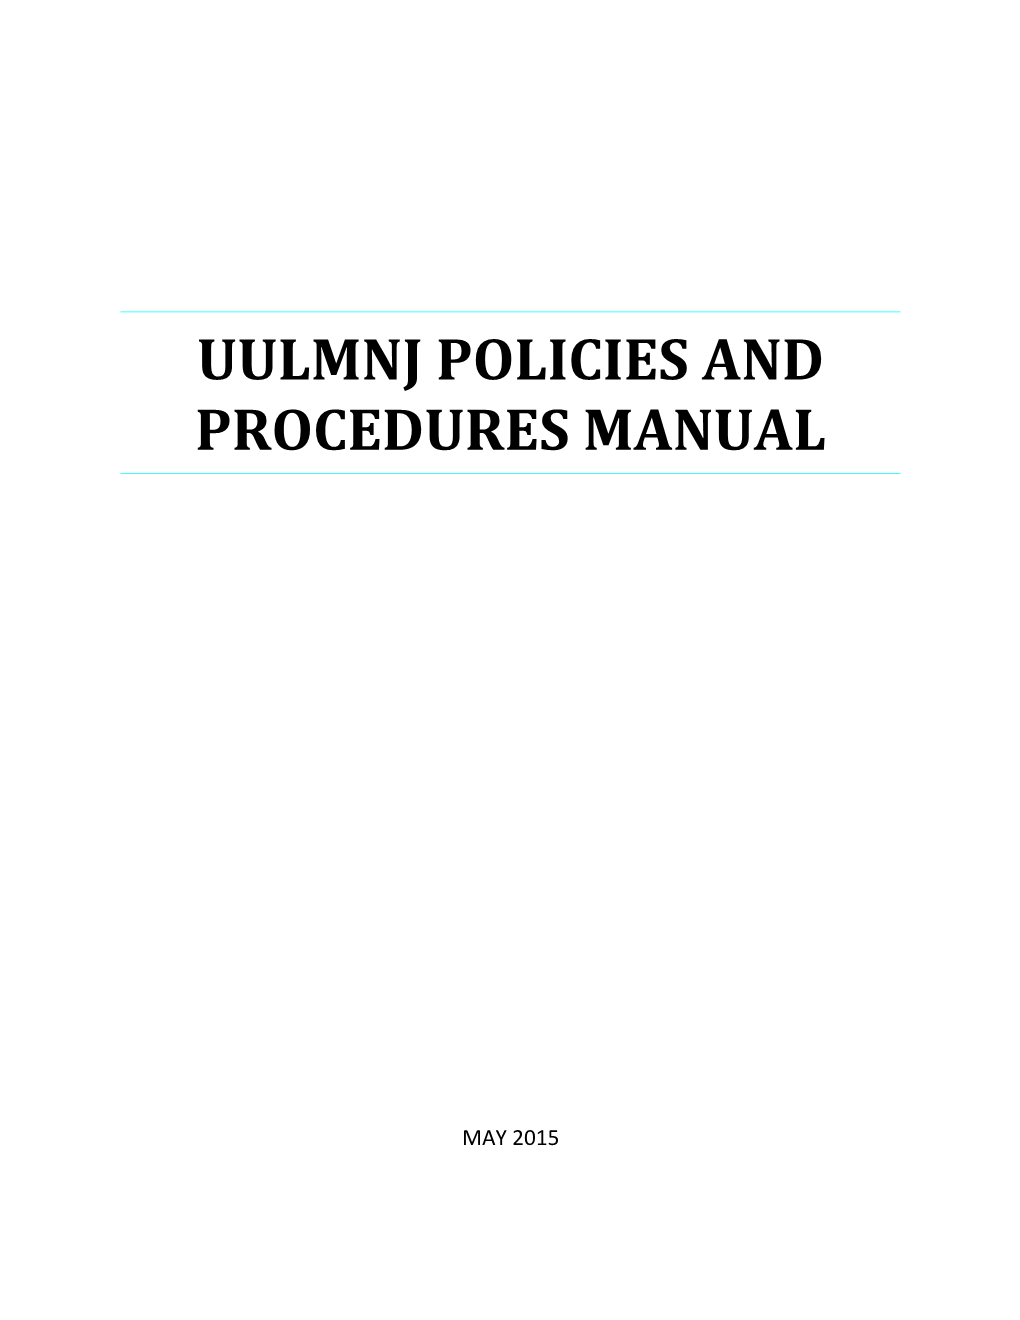 UULMNJ Policies and Procedures Manual